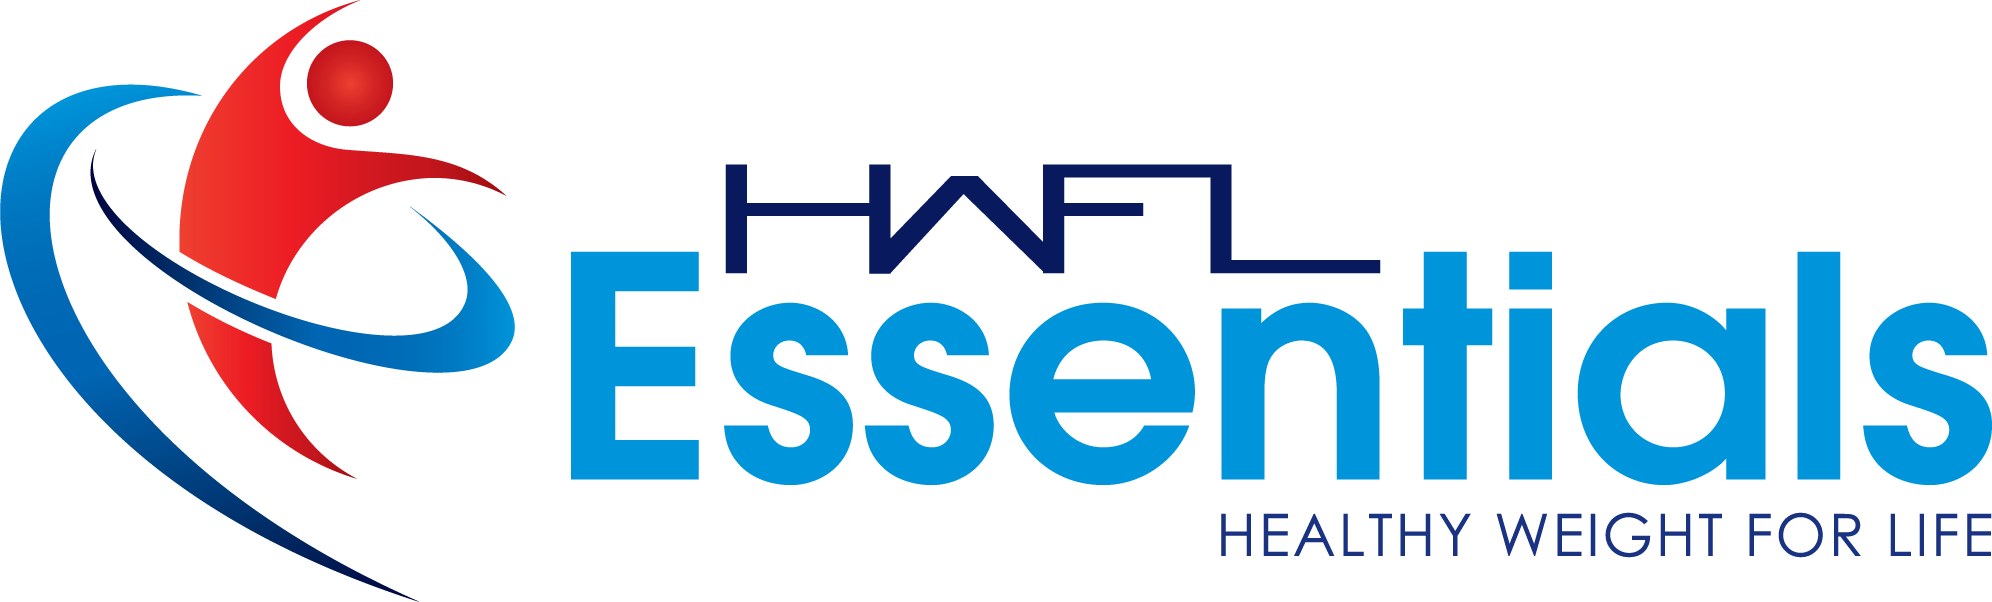 HWFL Essentials Logo_H